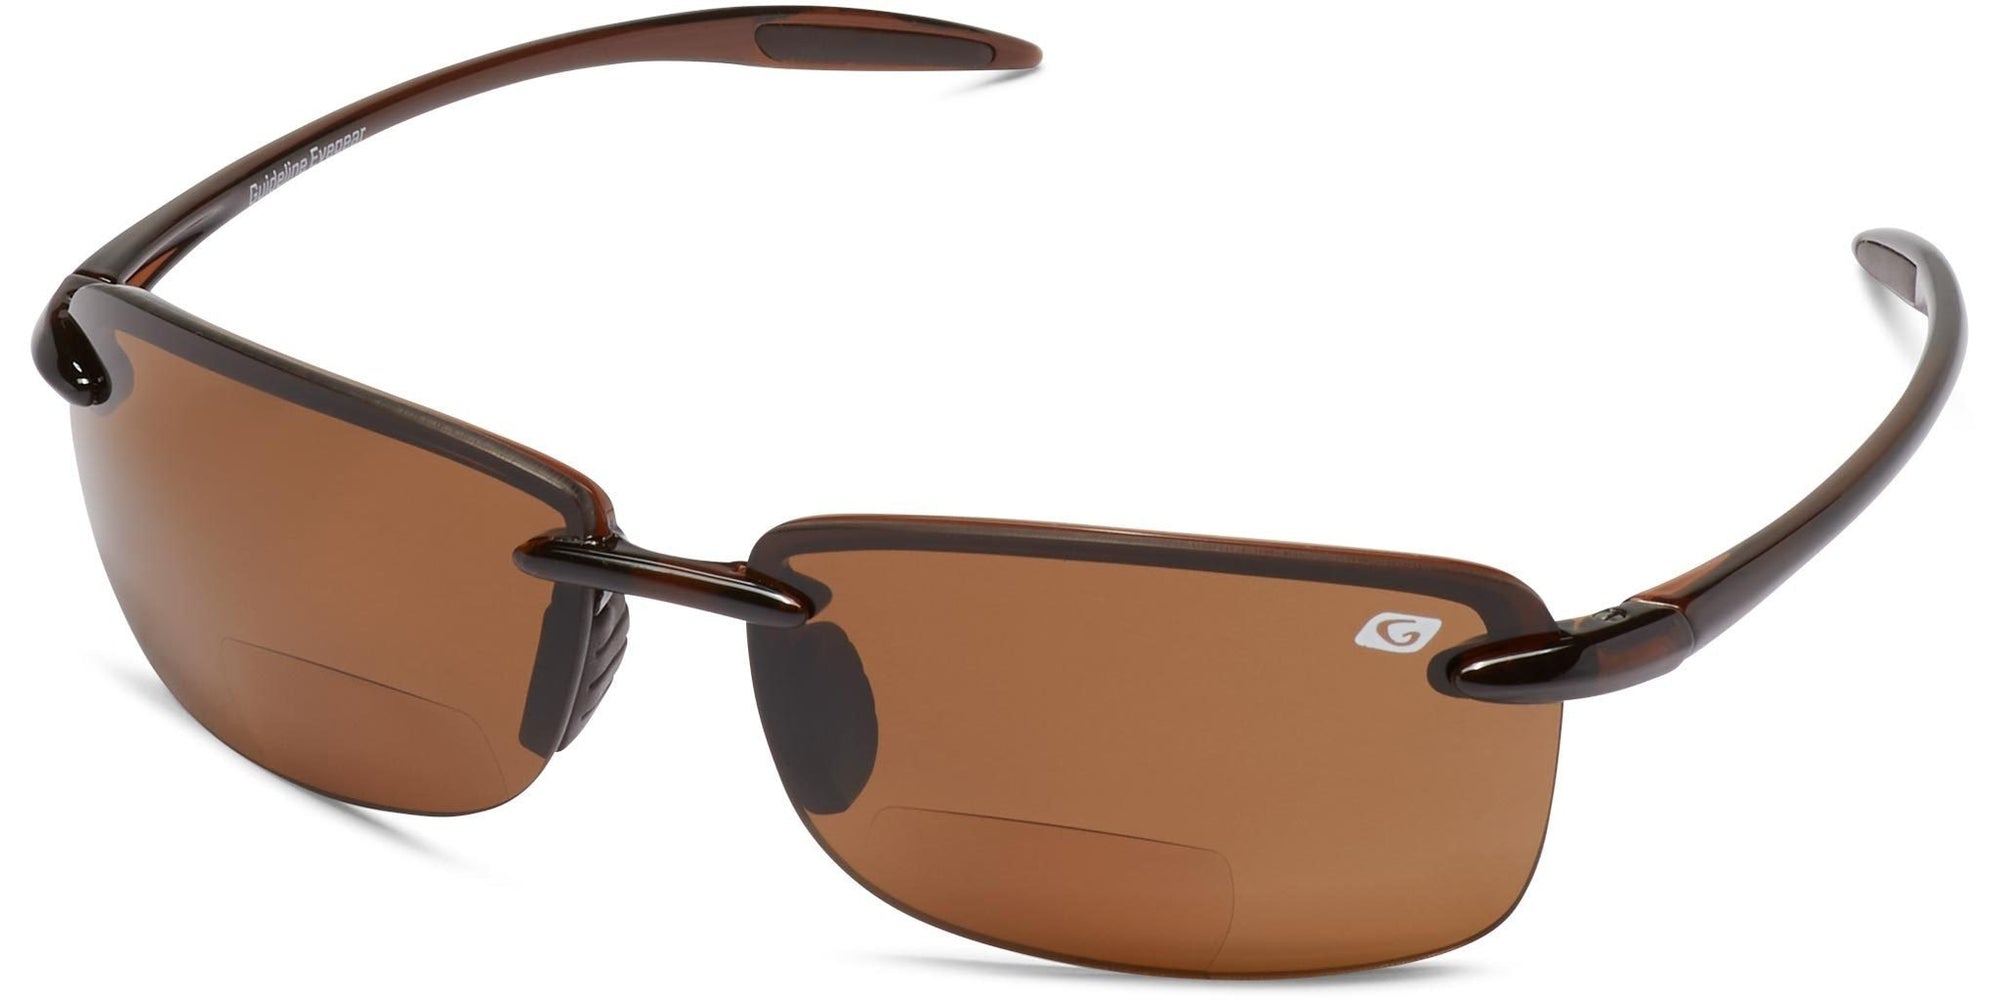 Del Mar Bifocal - Crystal Rootbeer/Copper Lens / 1.5 - Polarized Sunglasses